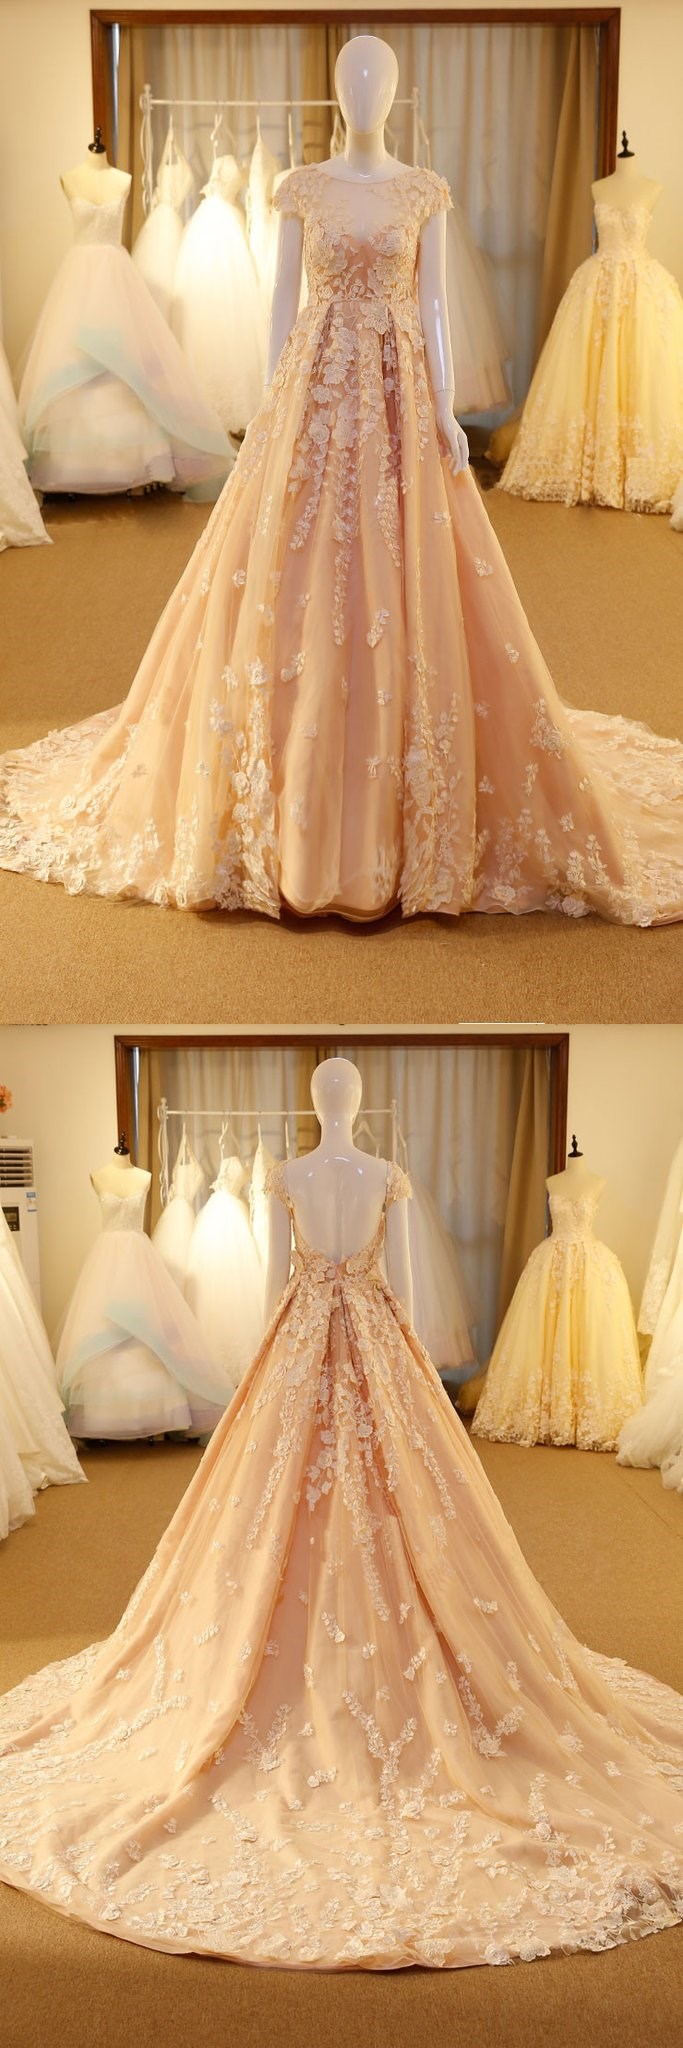 Unique Round Neck Tulle Lace Applique Pink Long Prom Dress, Pink Wedding Dress